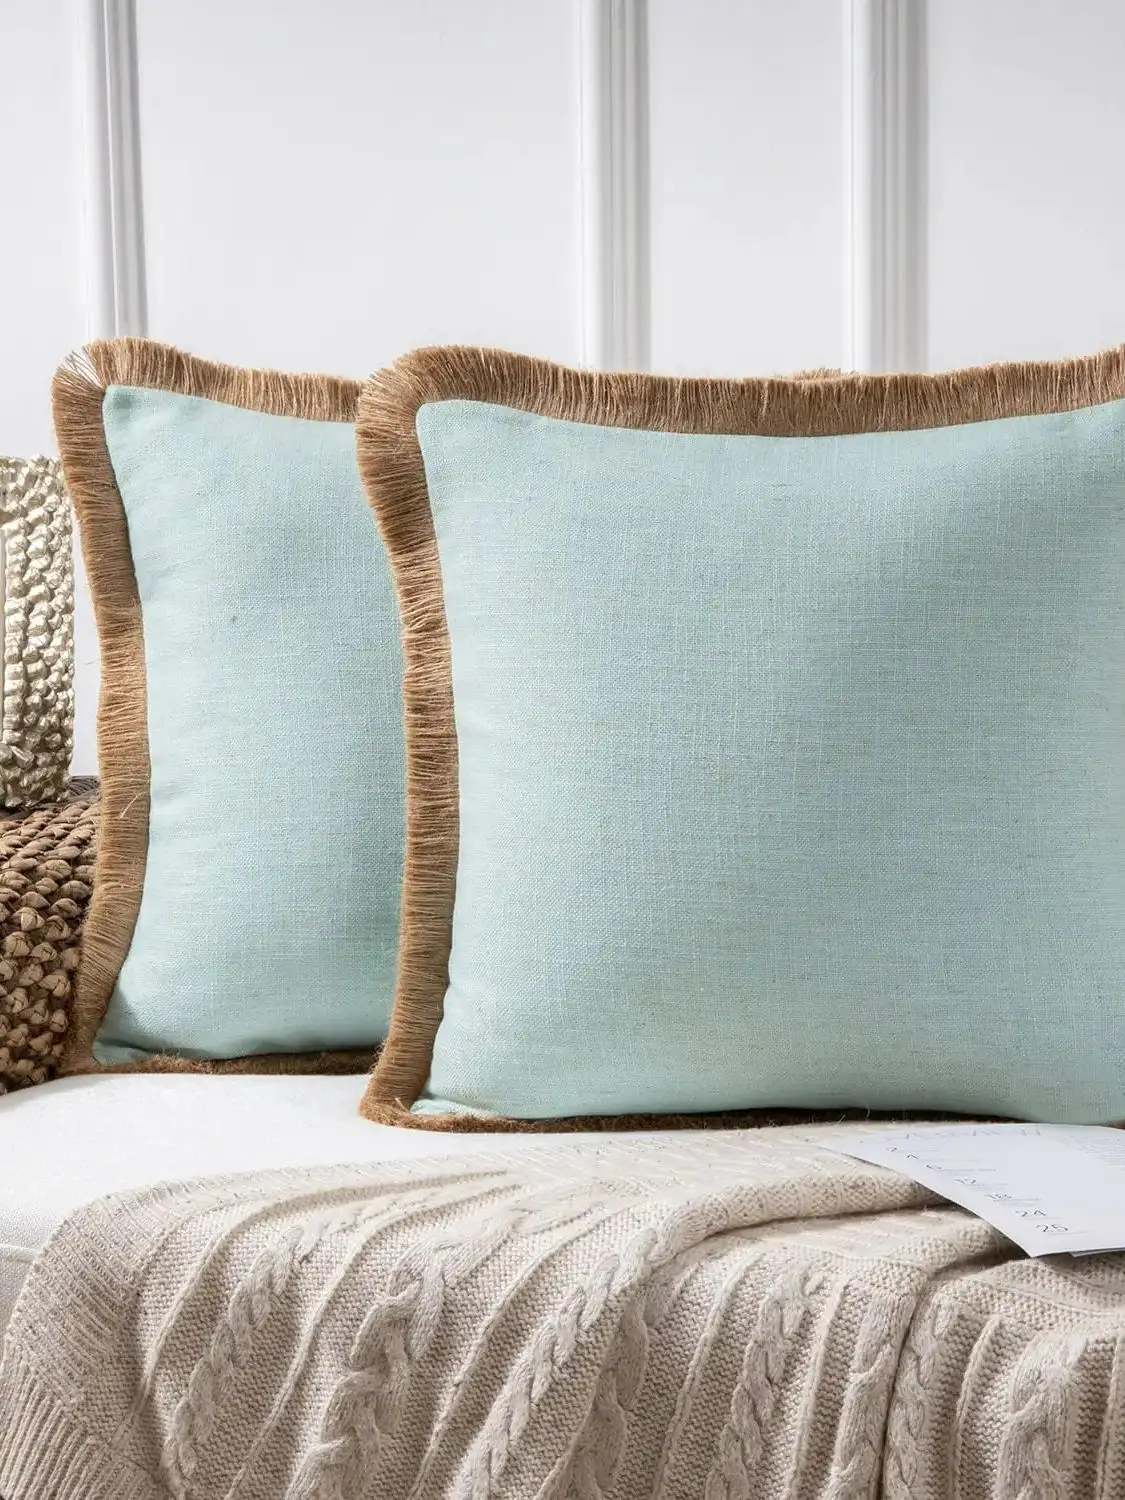 

Phantoscope Linen Tassel Trimmed Farmhouse Series Decorative Throw Pillow, 18" x 18", Water Blue, 2 Pack